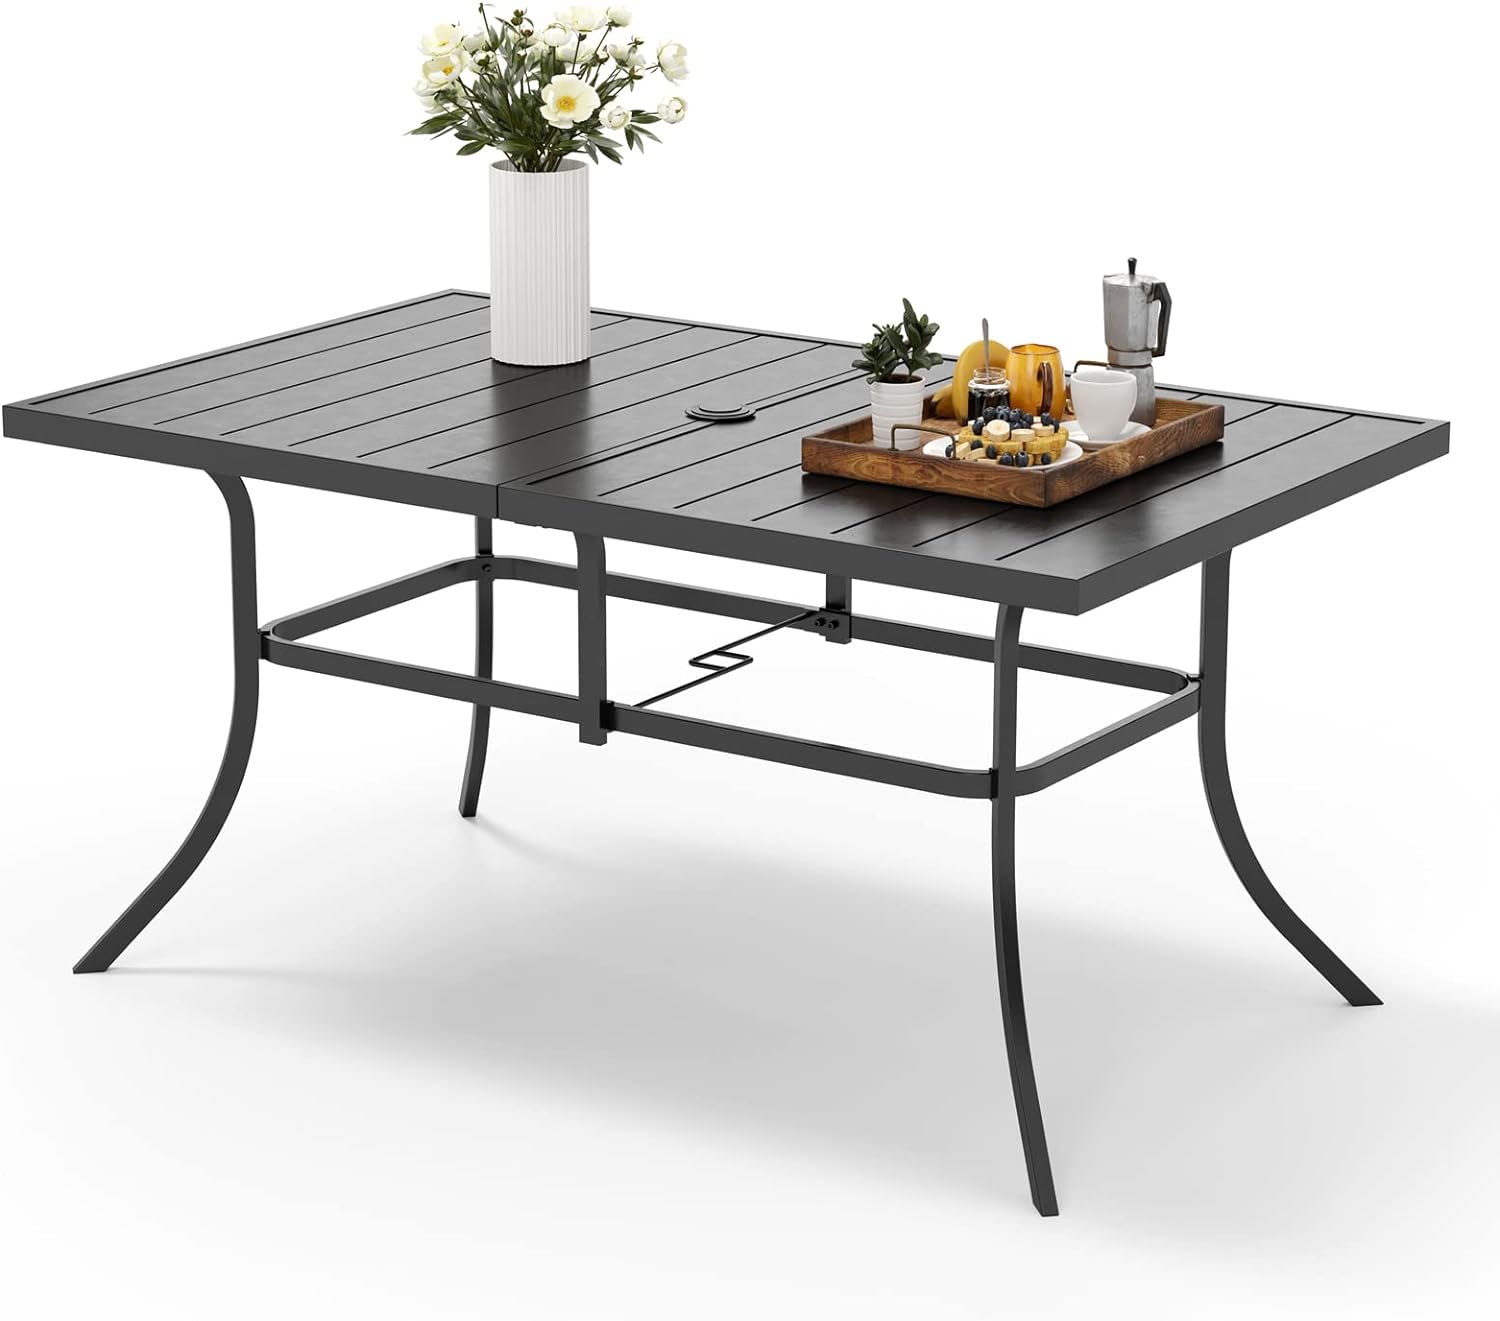 MFSTUDIOO 6-Person Outdoor Metal Steel Slat Dining Rectangle Table with Adjustable Umbrella Hole, Black